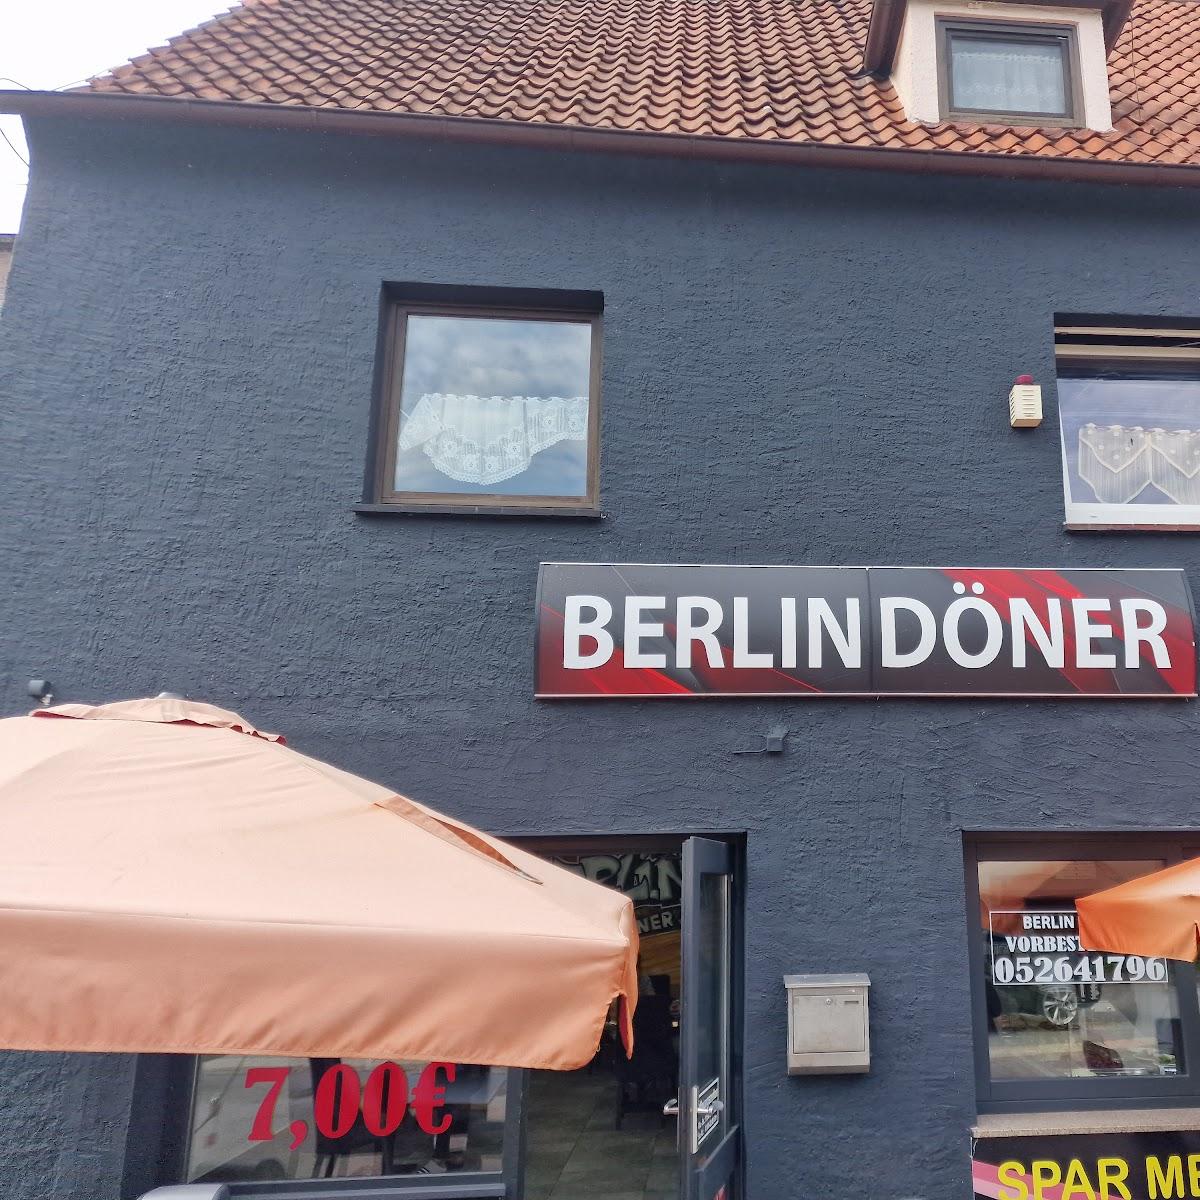 Restaurant "Berlin Döner" in Kalletal